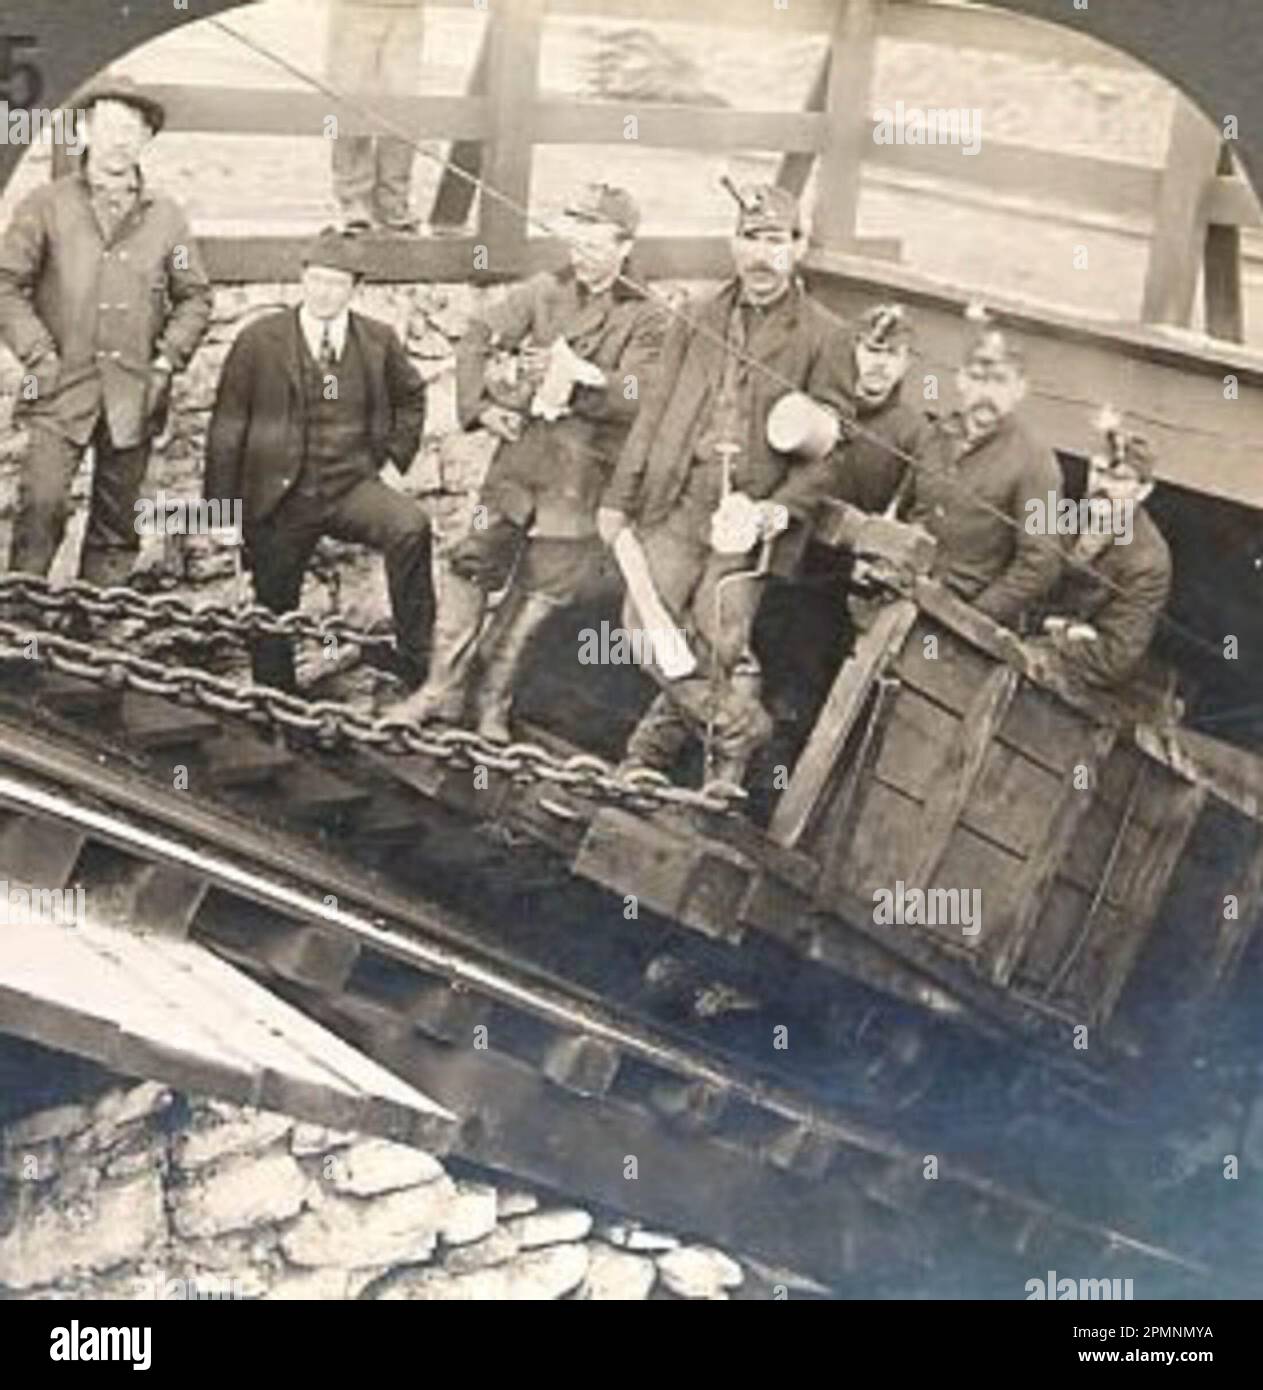 Coal miners in Hazleton, Pennsylvania, in 1900. Stock Photo